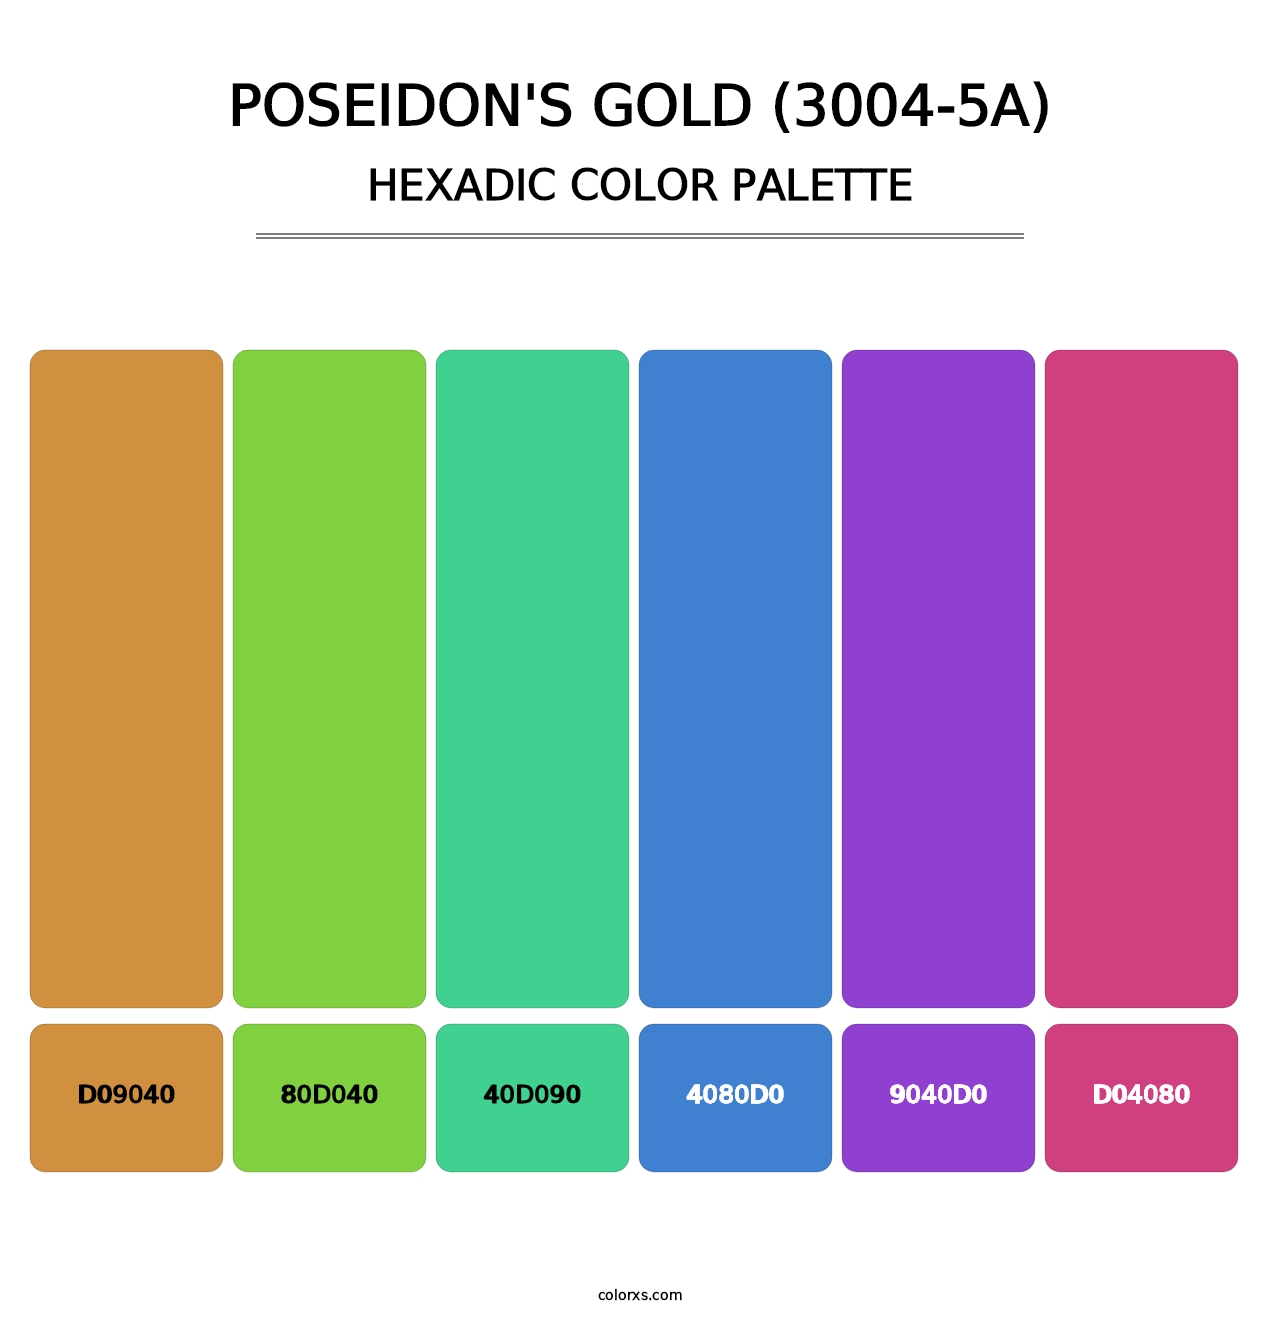 Poseidon's Gold (3004-5A) - Hexadic Color Palette